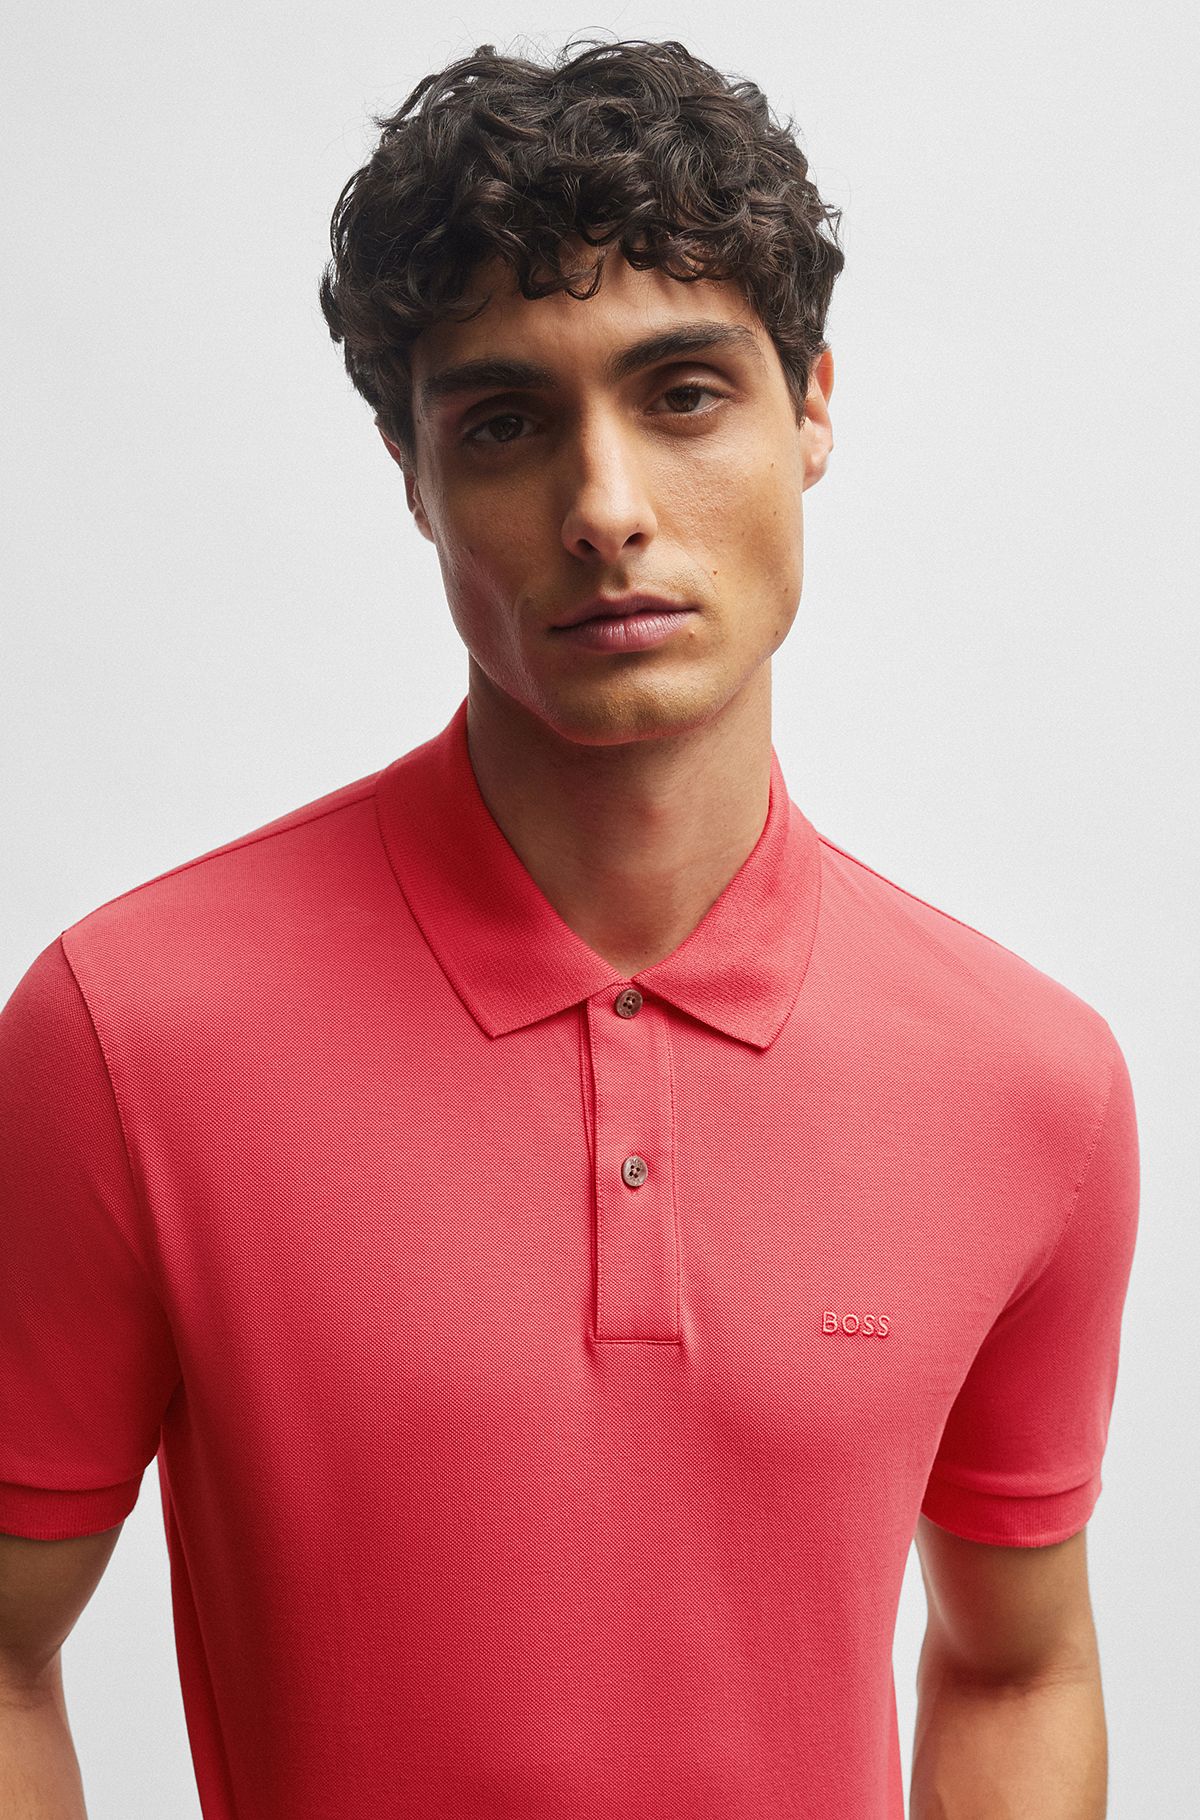 | HUGO Pink Polo for Menswear Shirts by Men Designer BOSS